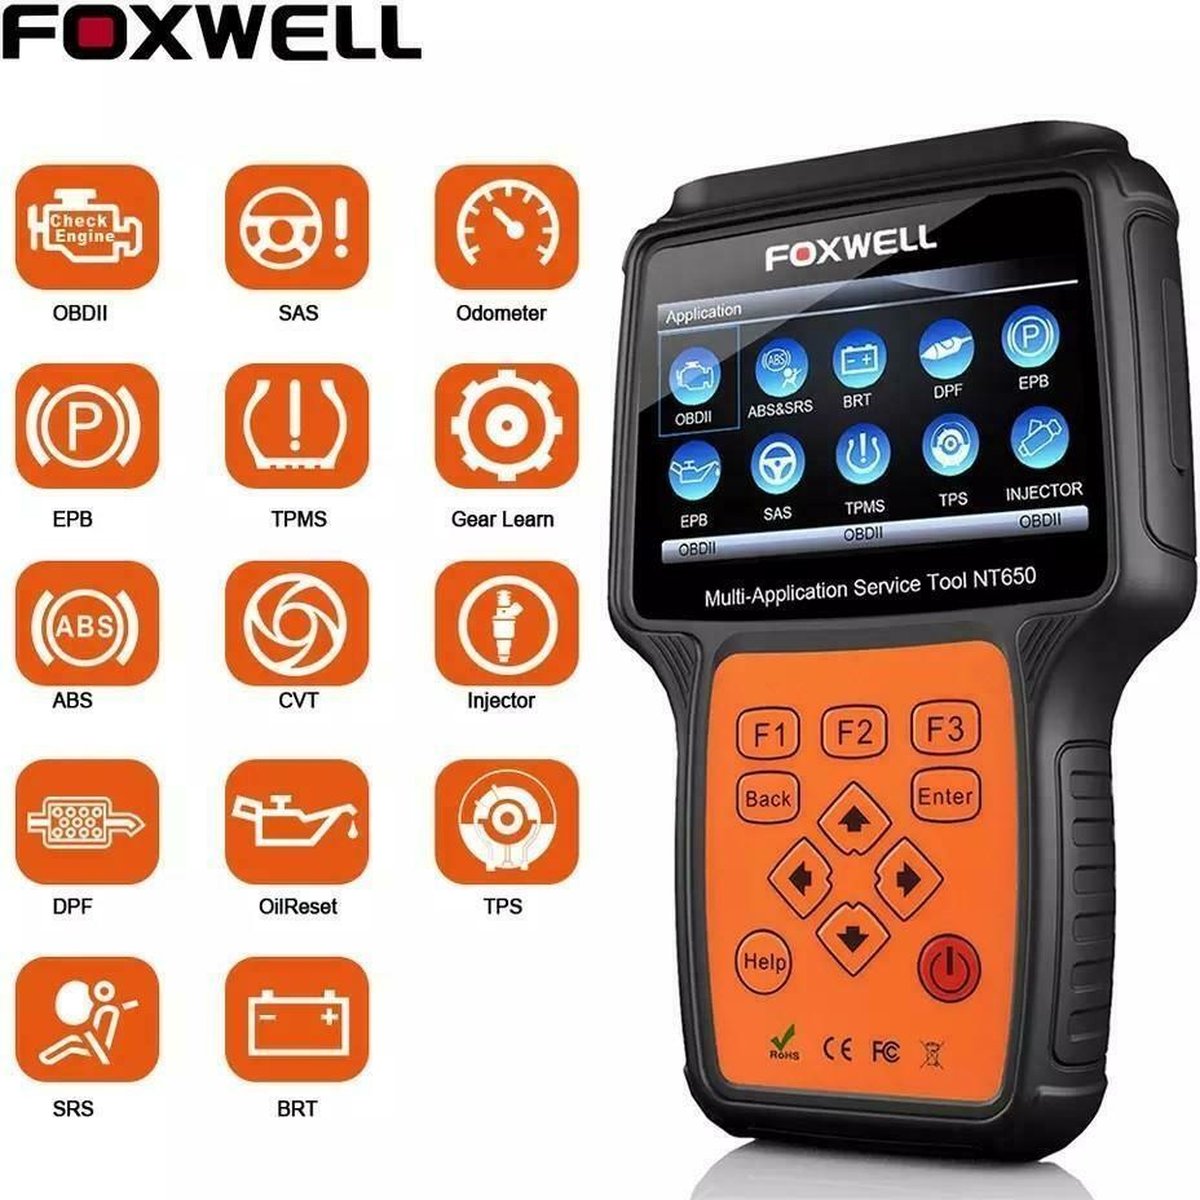 foxwell nt650 elite review